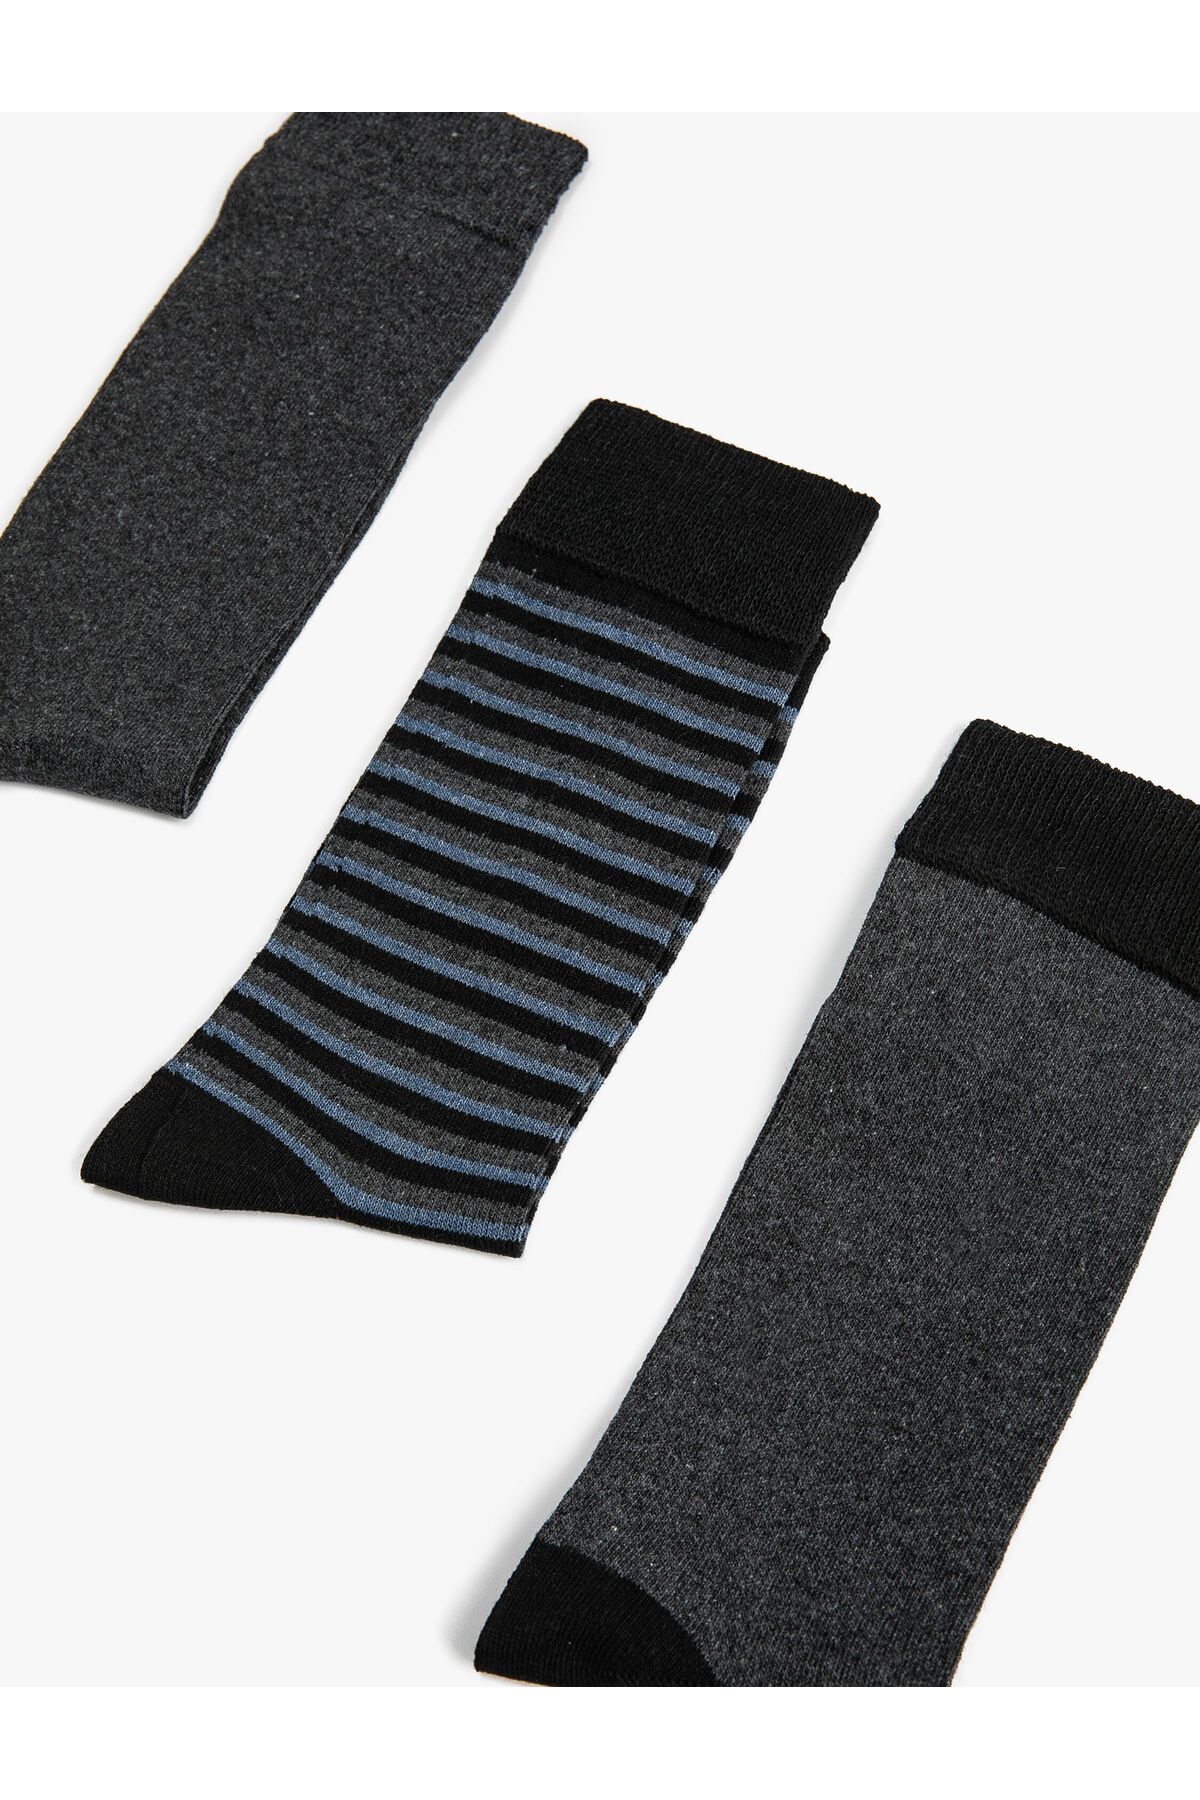 Koton Çizgili 3'lü Soket Çorap Seti Çok Renkli